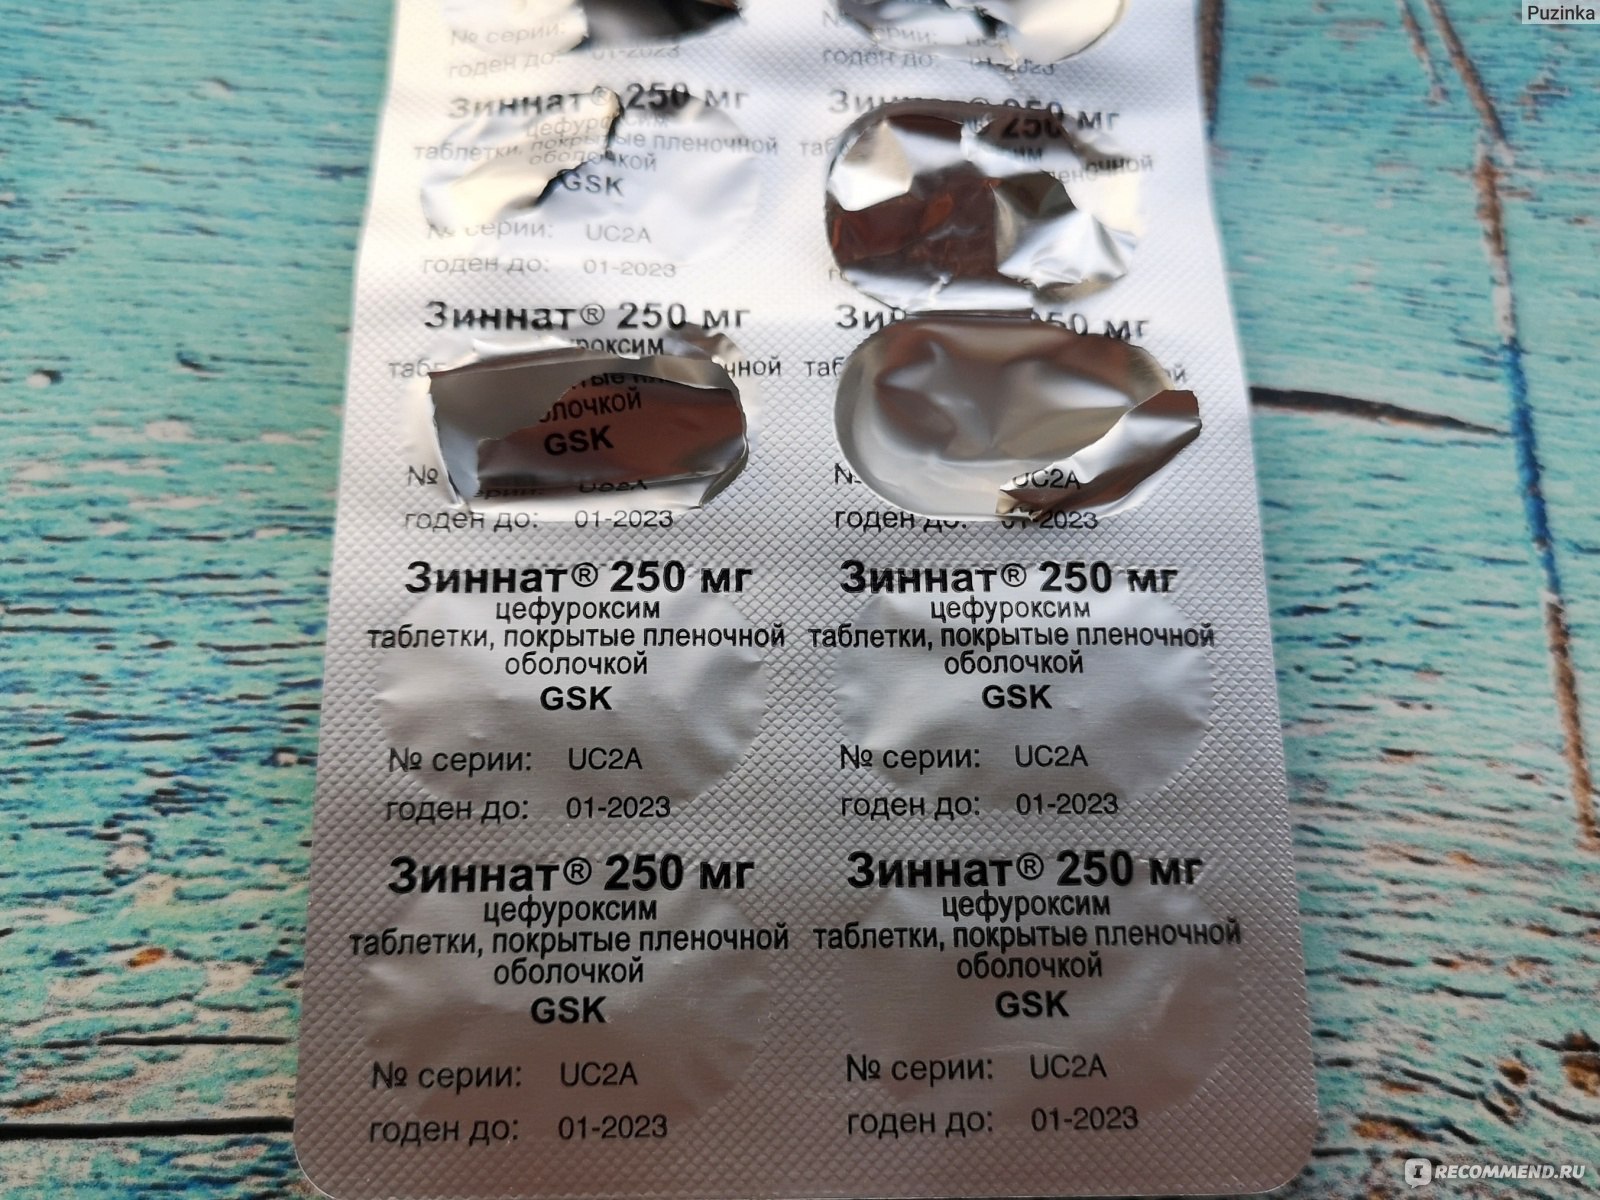 Зиннат Антибиотик 250 Цена Мг Таблетки